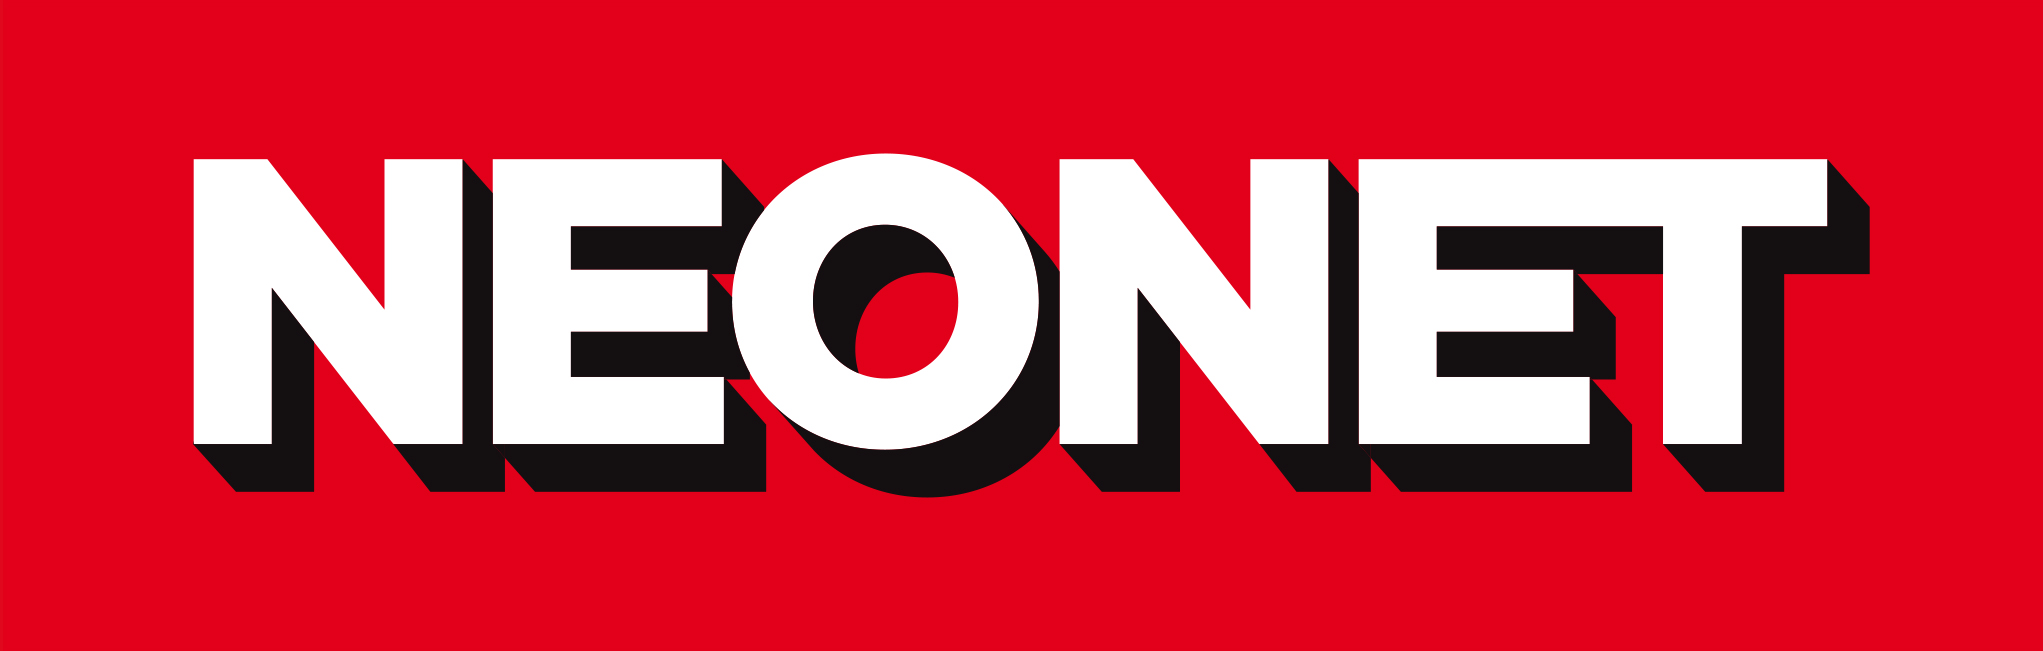 Neonet-logo